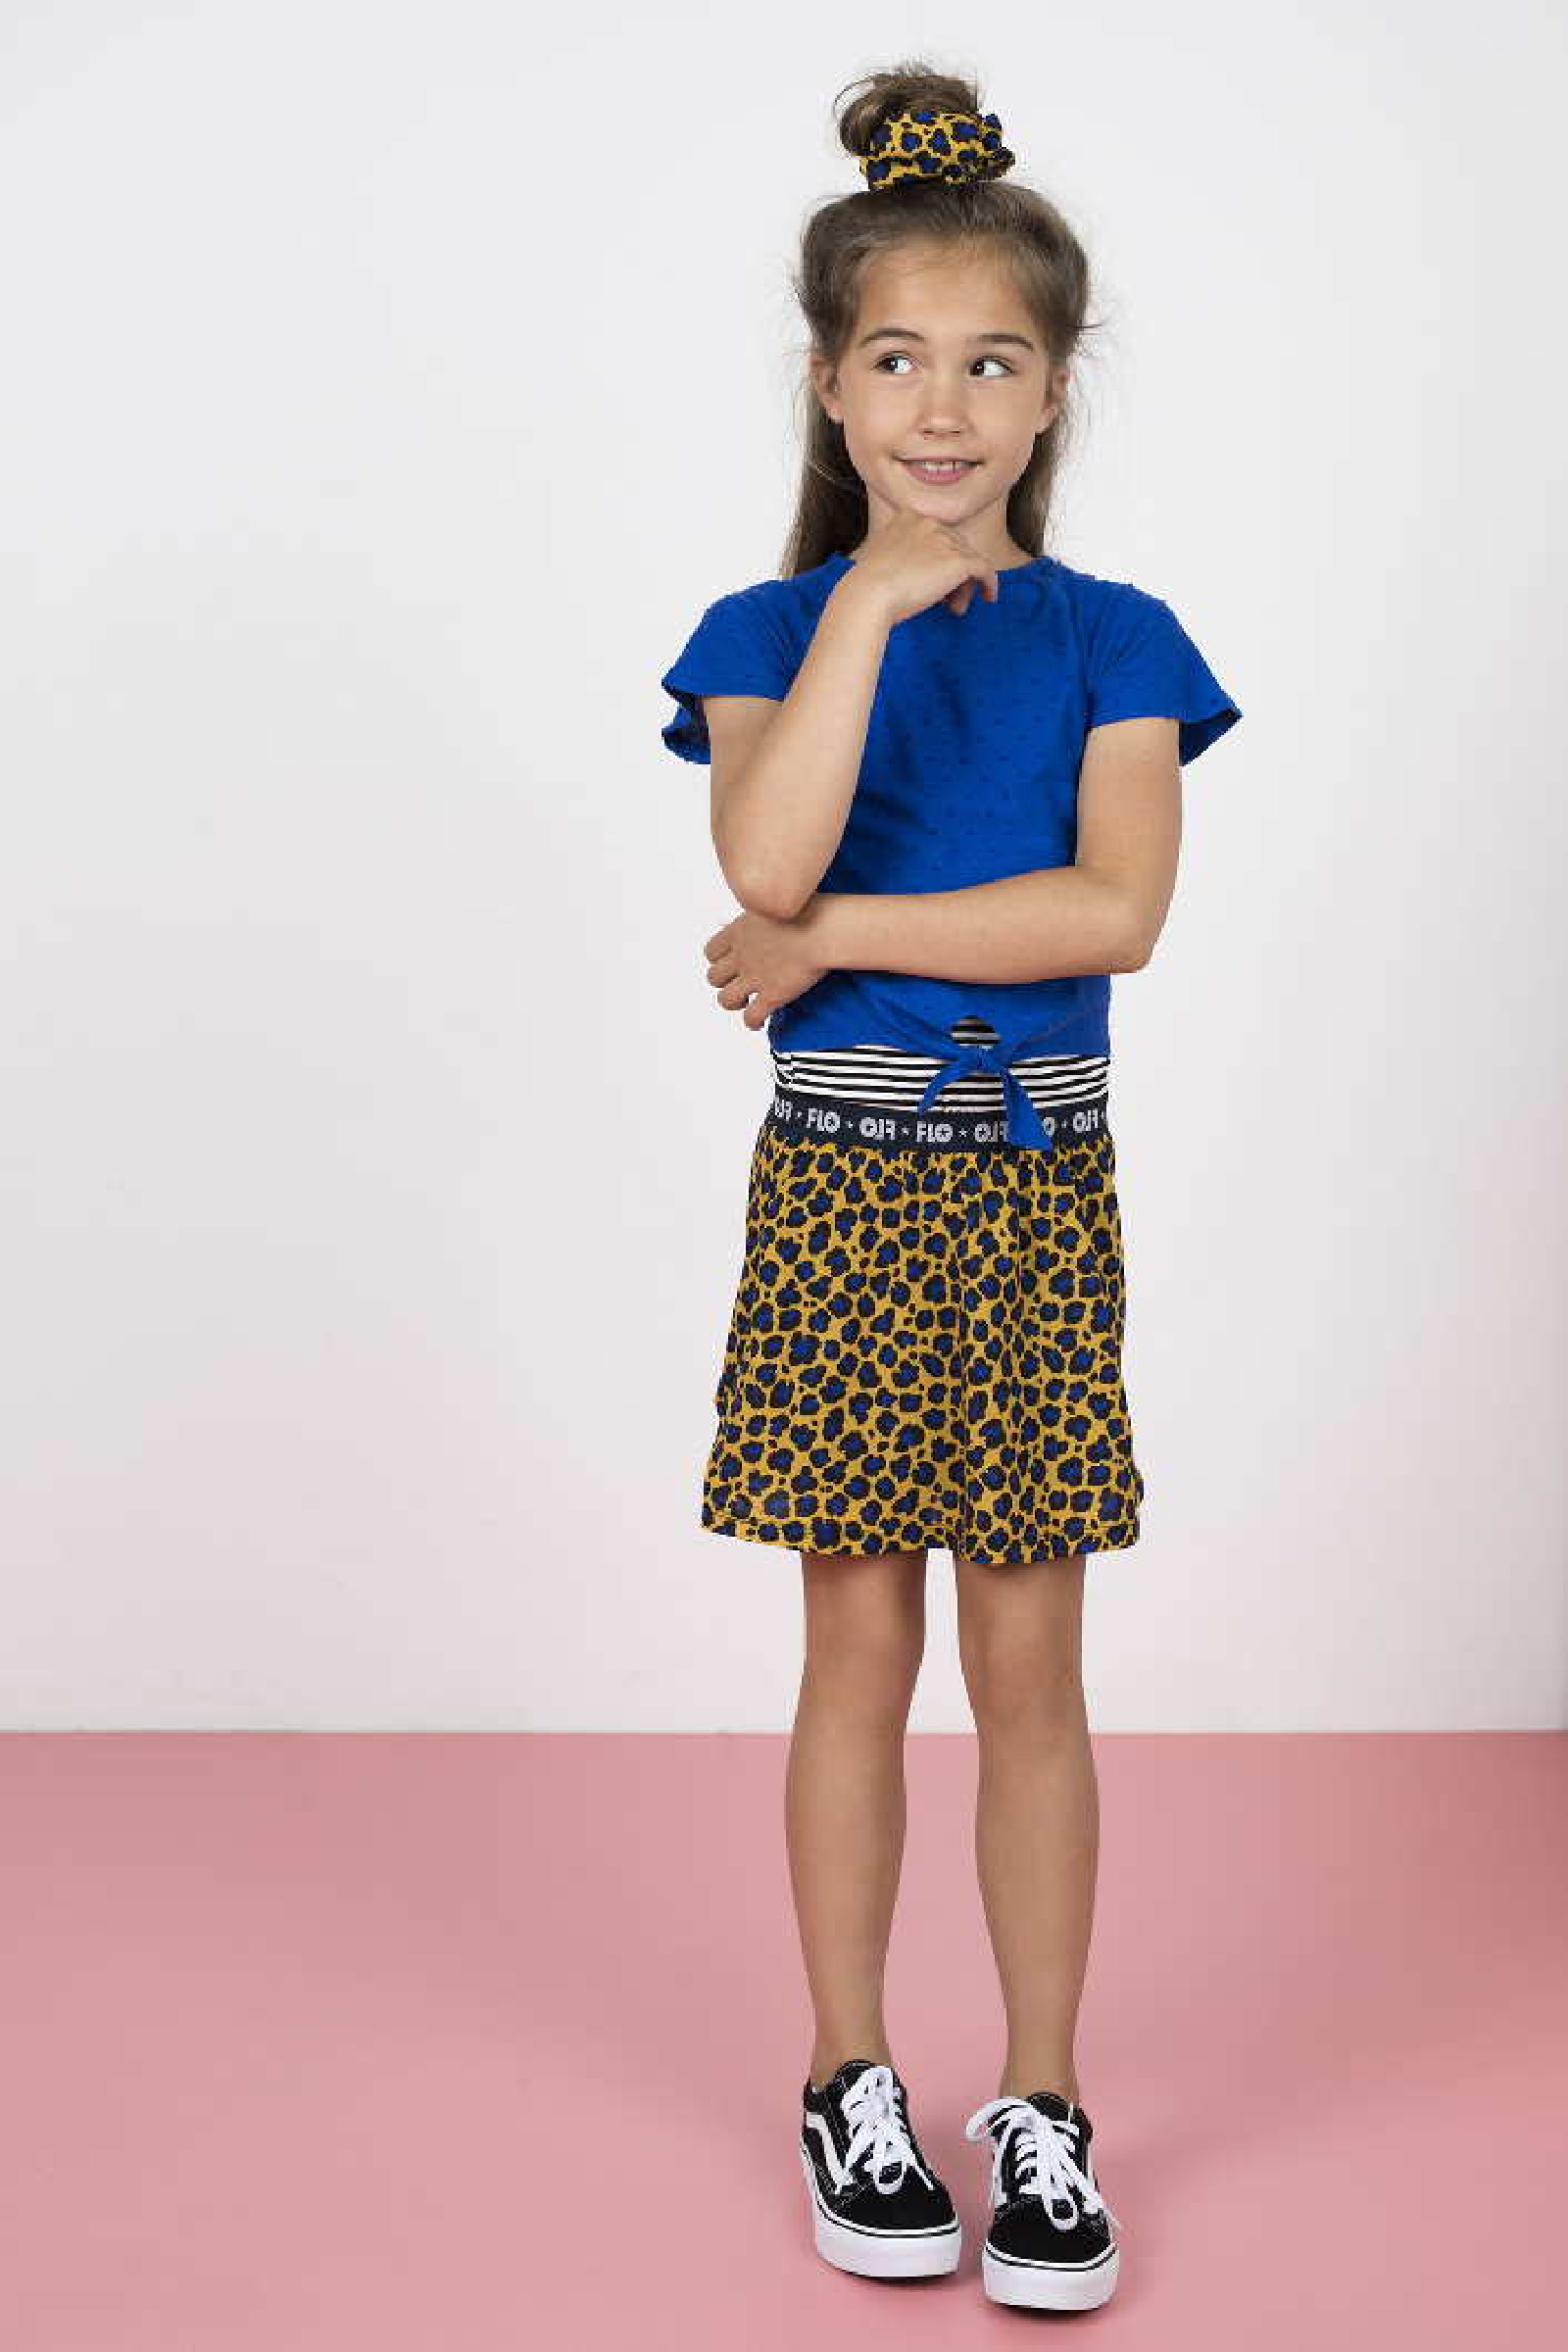 Meisjes Flo girls 2pc viscose dot dress with AO panter skirt and knotted stripe tee van Flo in de kleur Cobalt in maat 152.